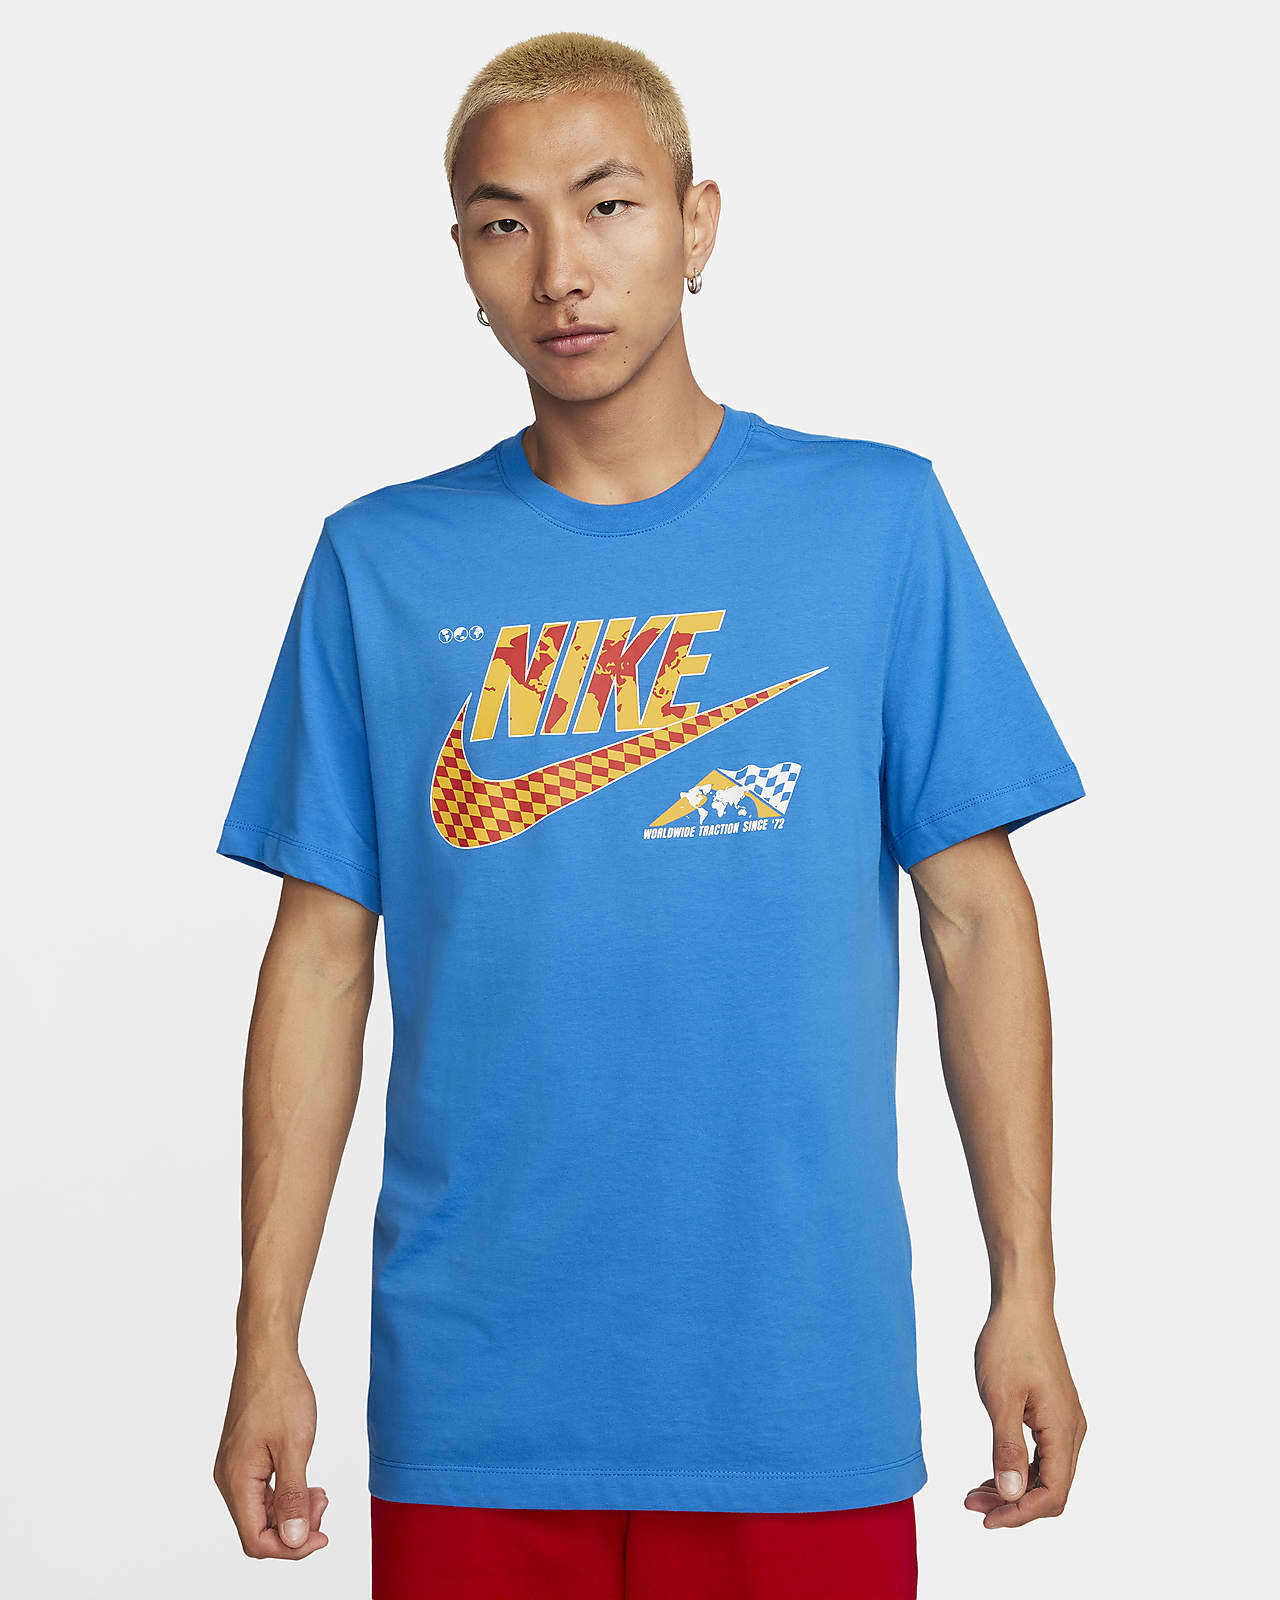 Nike Sportswear Camiseta - Hombre